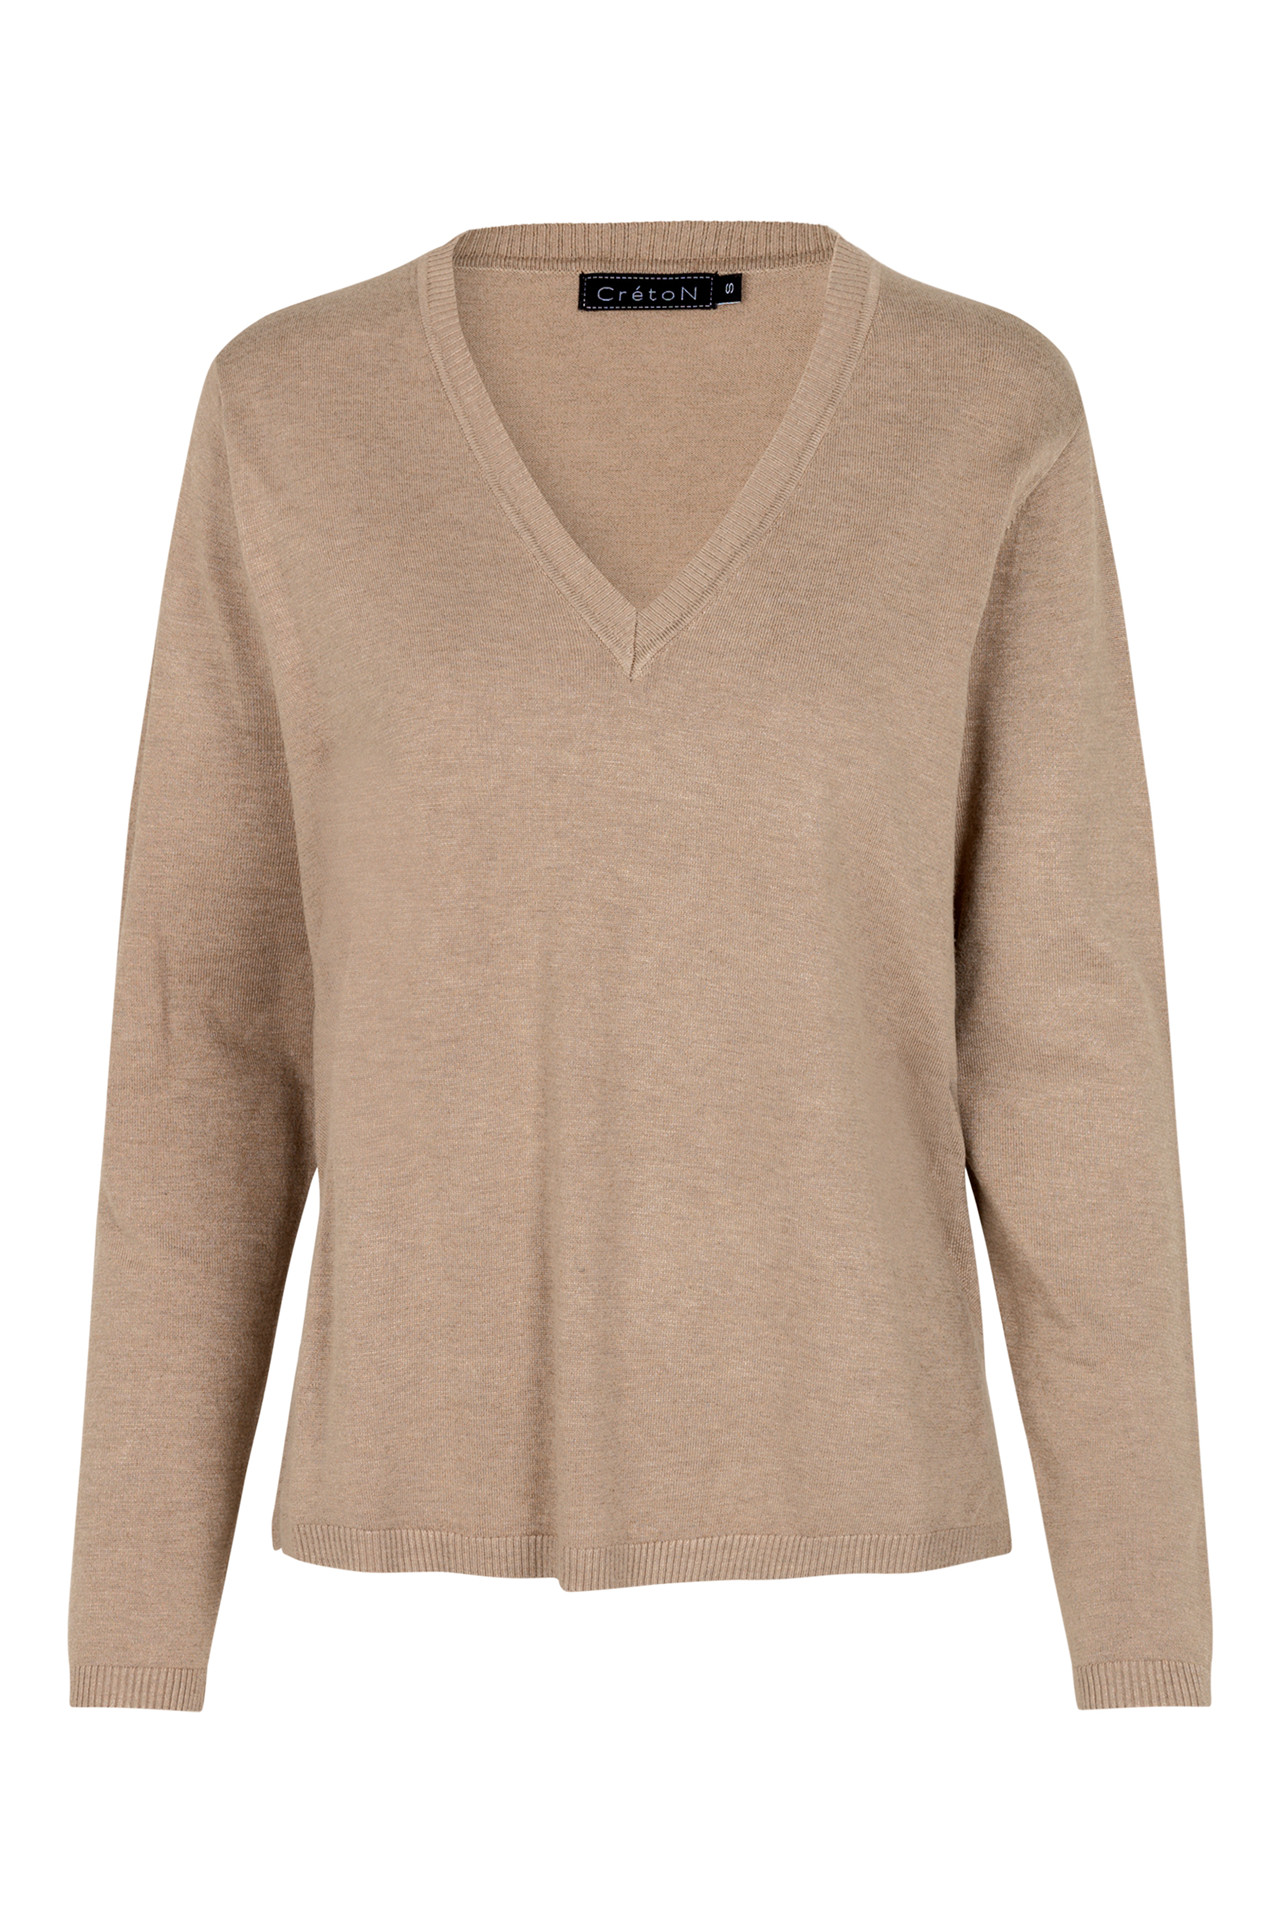 CRÉTON Wicky v-hals sweater (CAMEL MELANGE S)